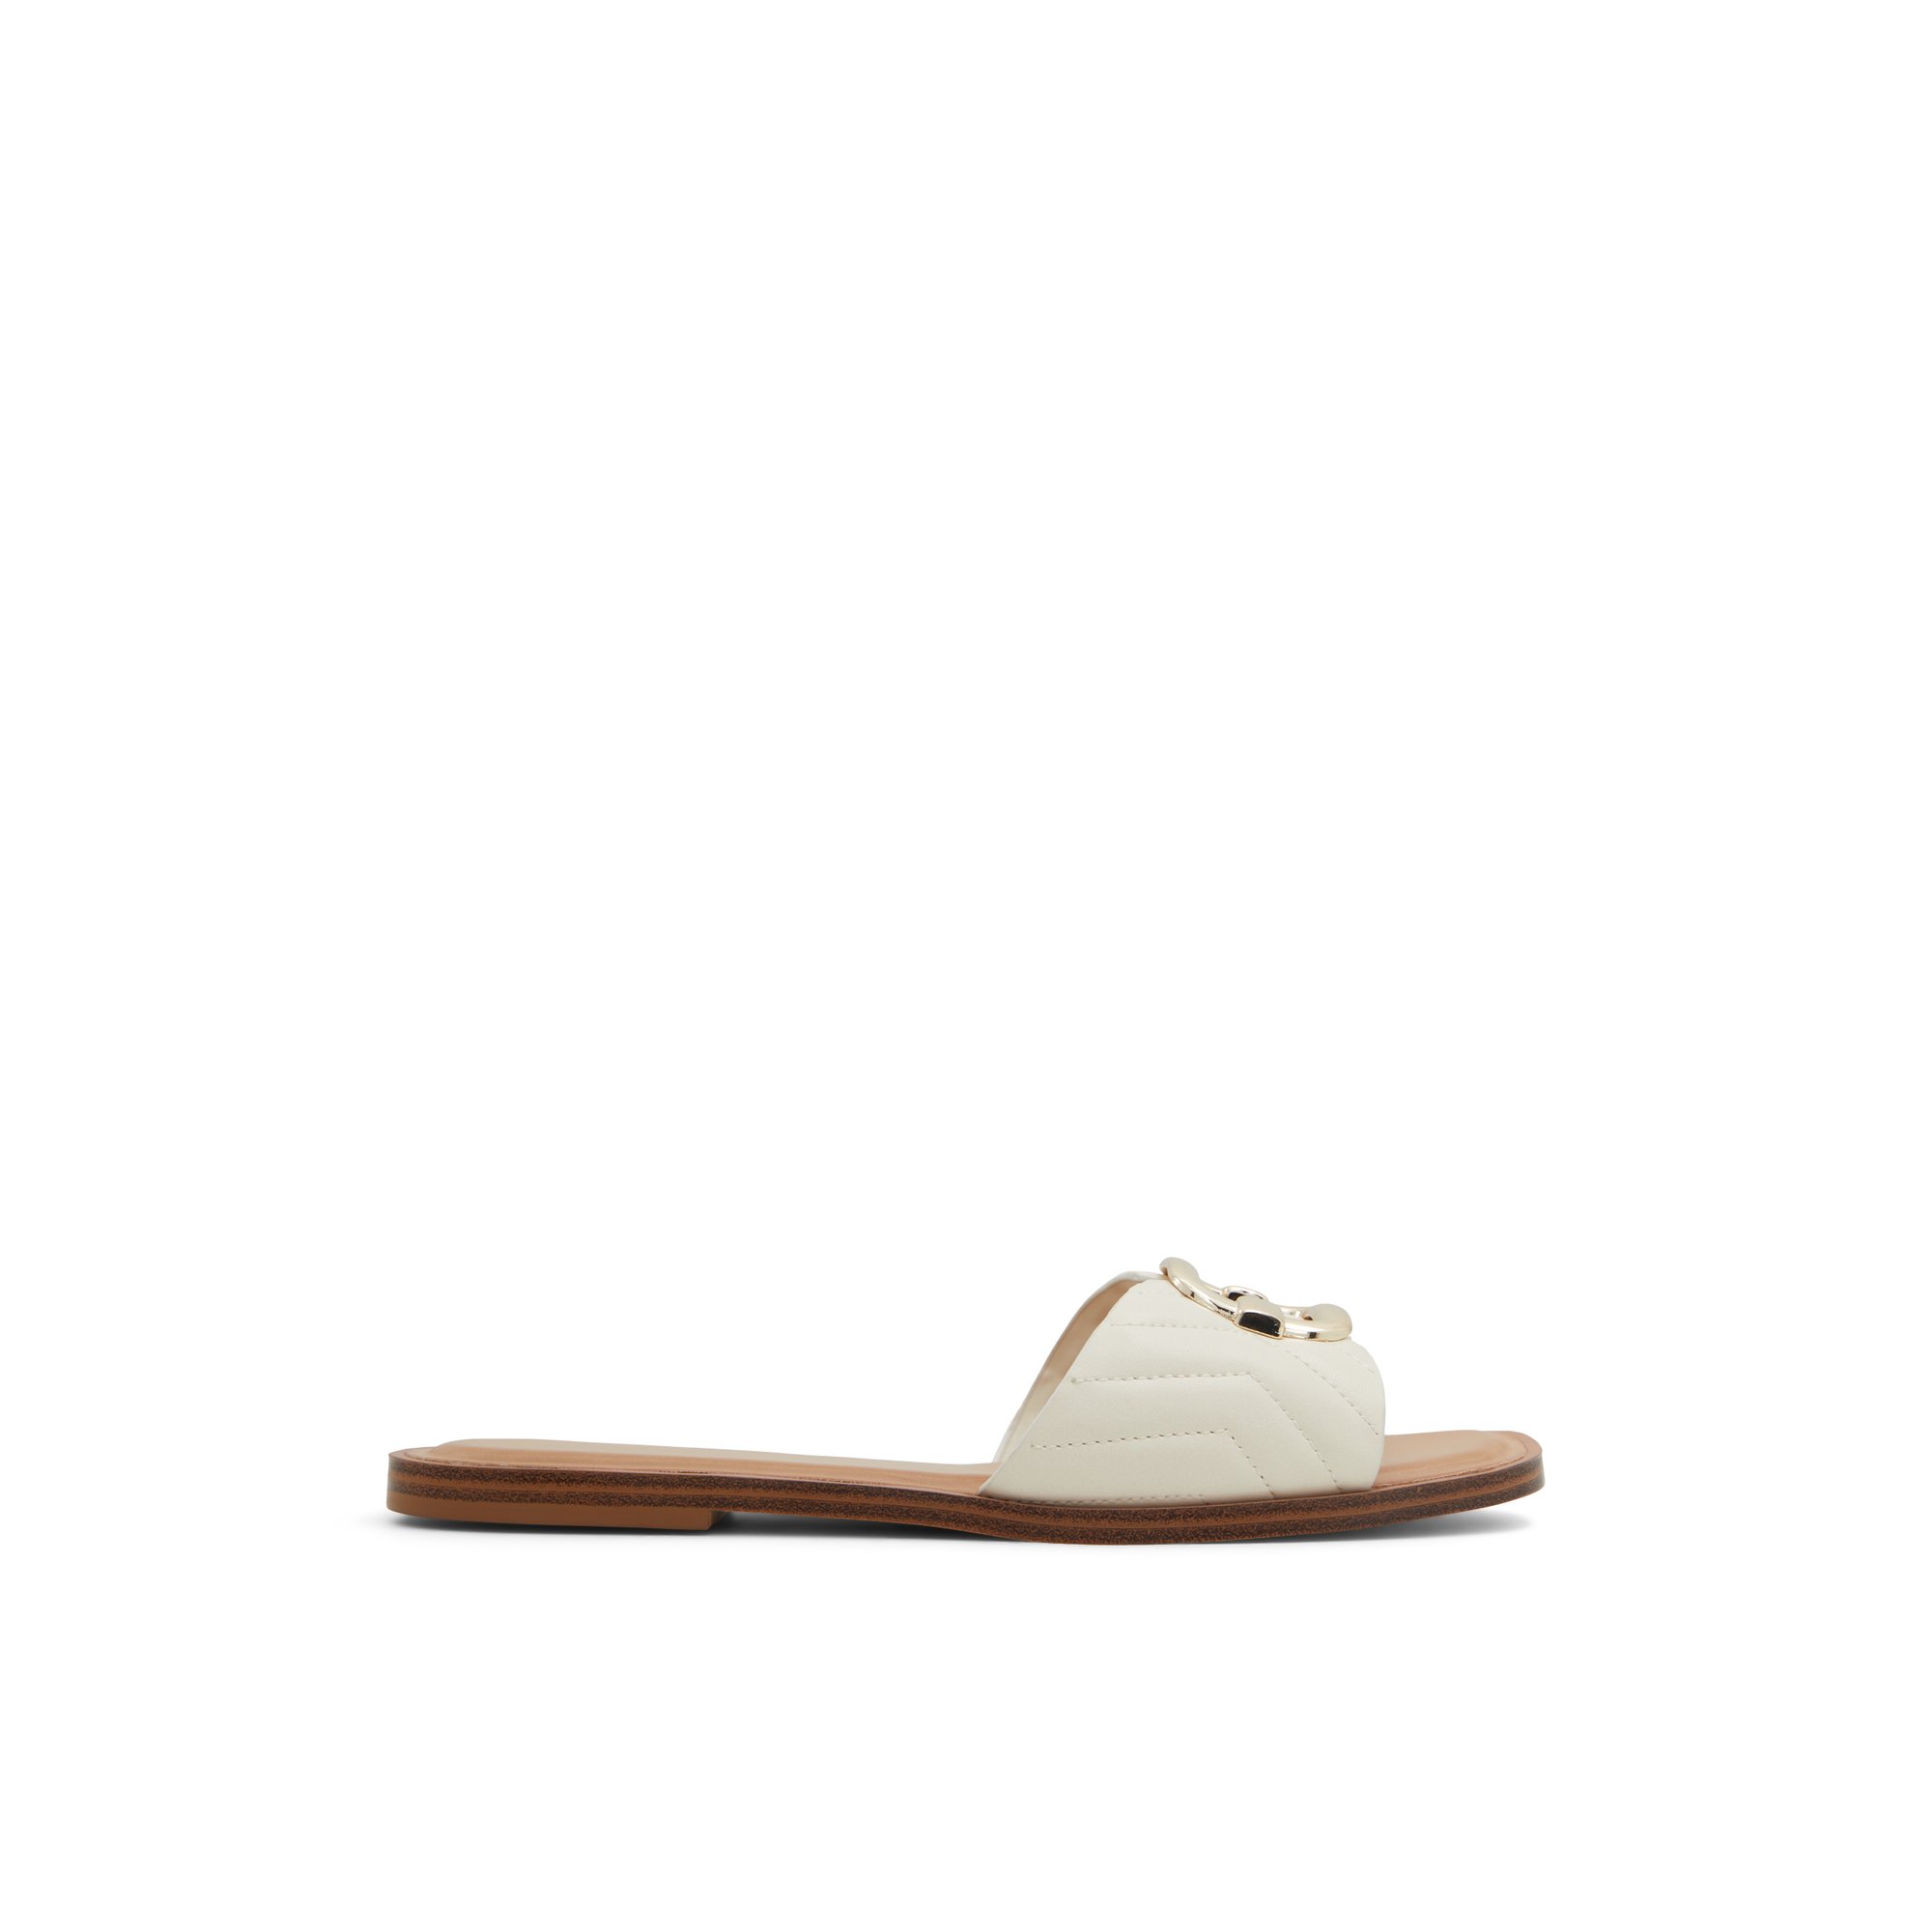 ALDO Qelajar - Women's Flat Sandals - White